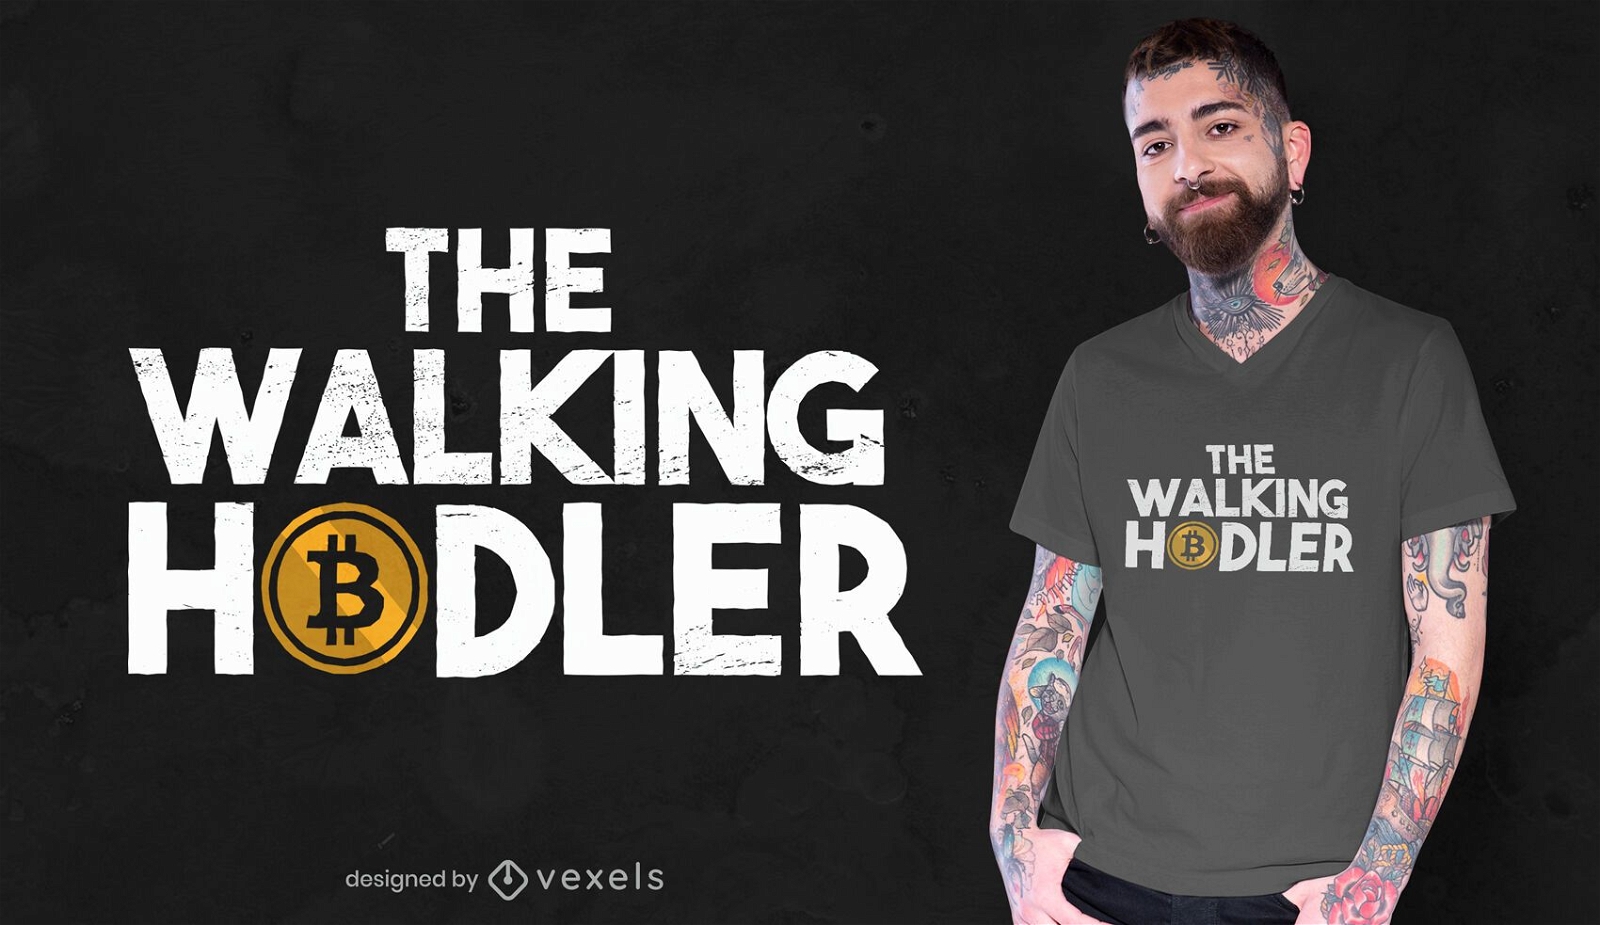 Walking hodler t-shirt design